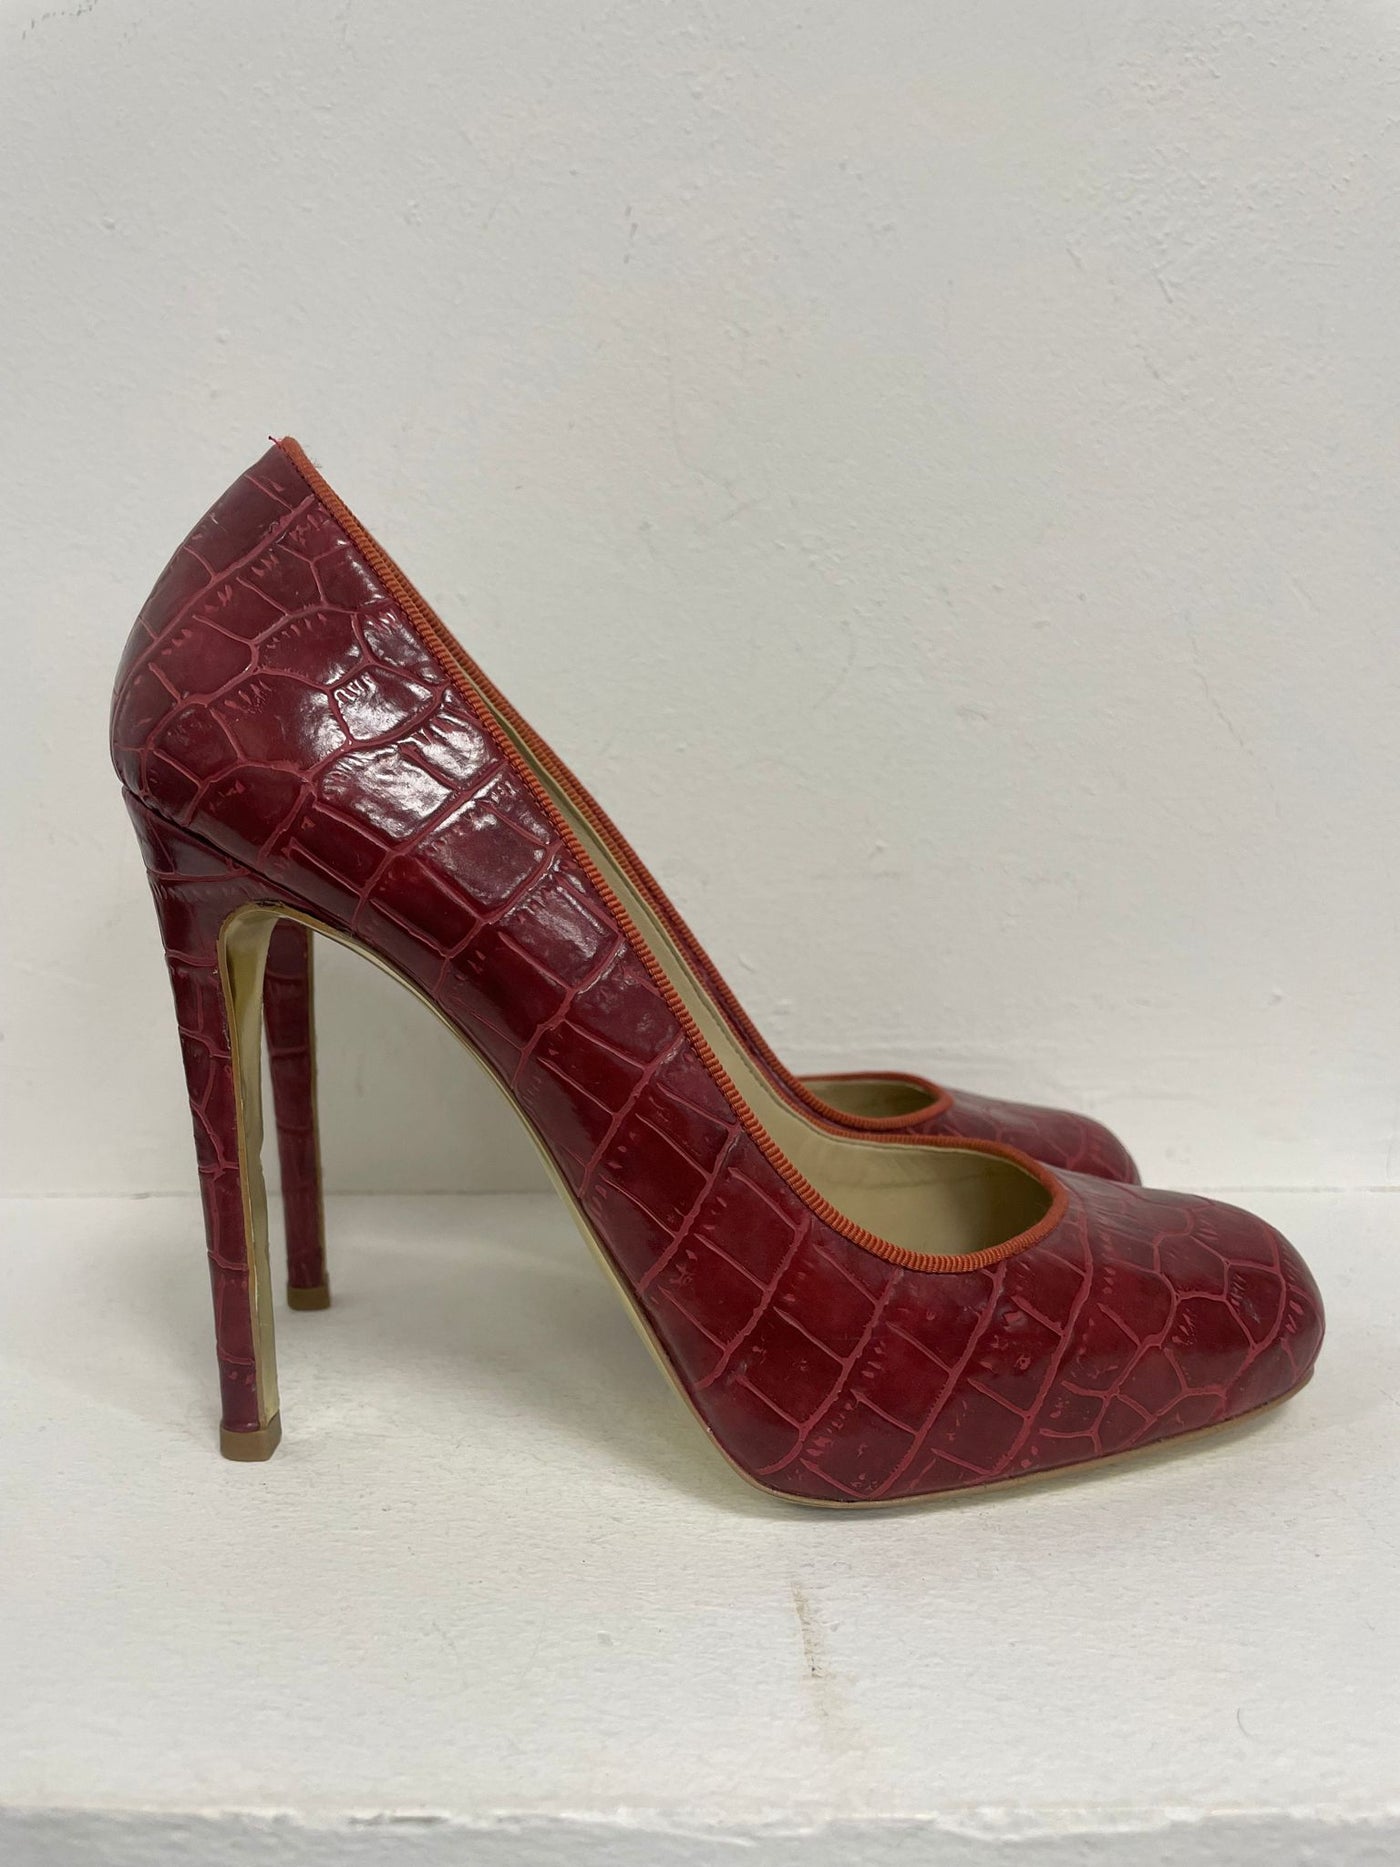 Stella McCartney red heels size 38